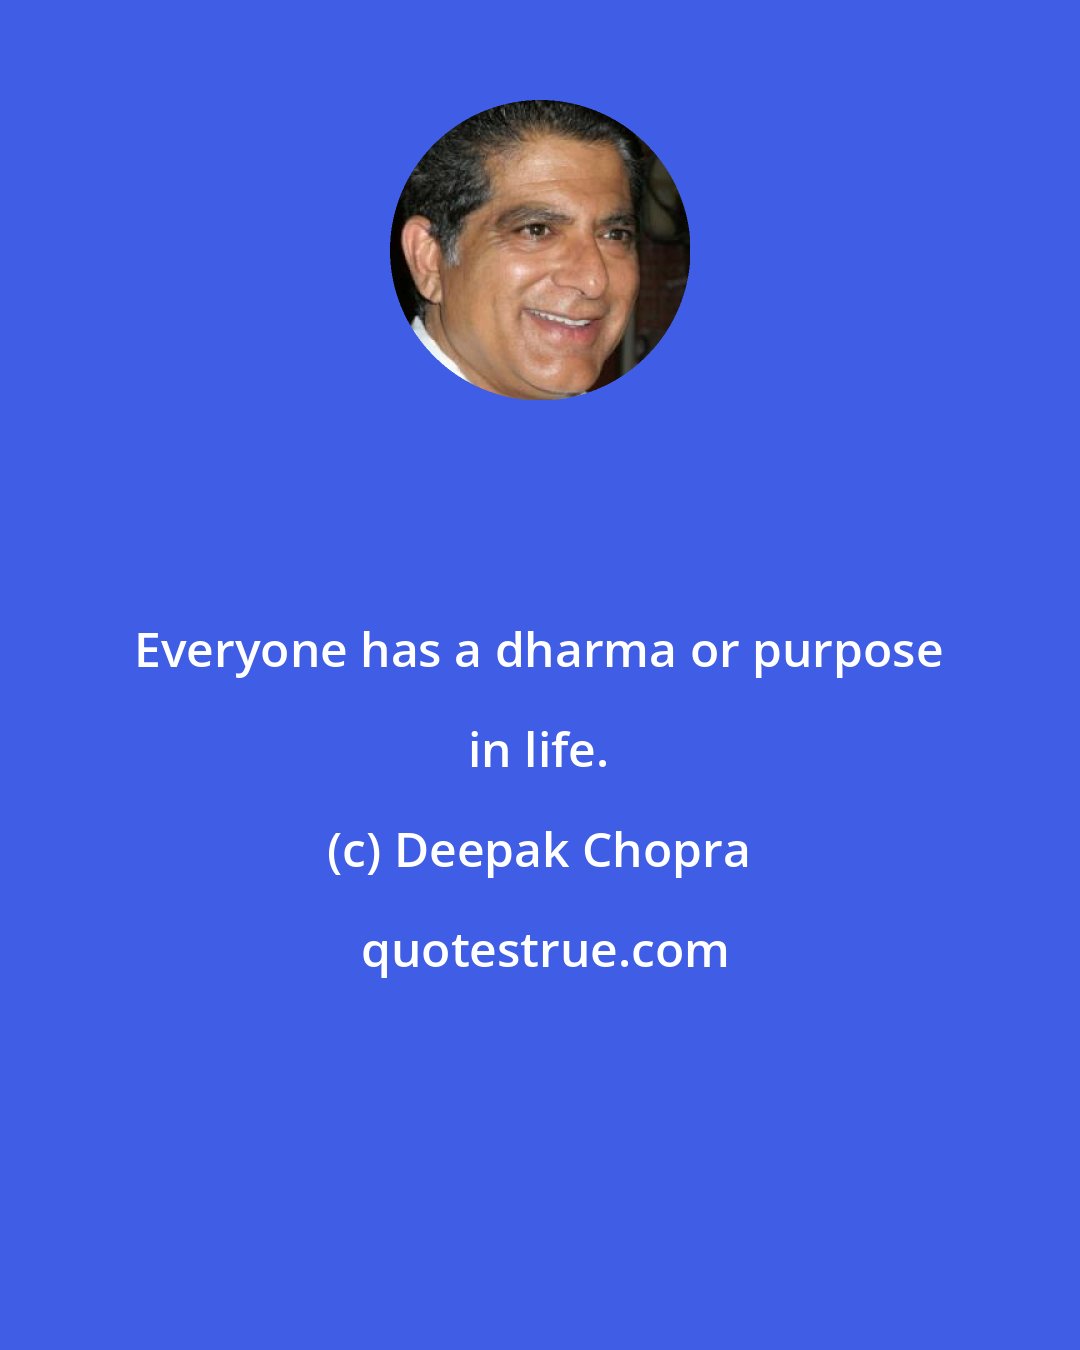 Deepak Chopra: Everyone has a dharma or purpose in life.